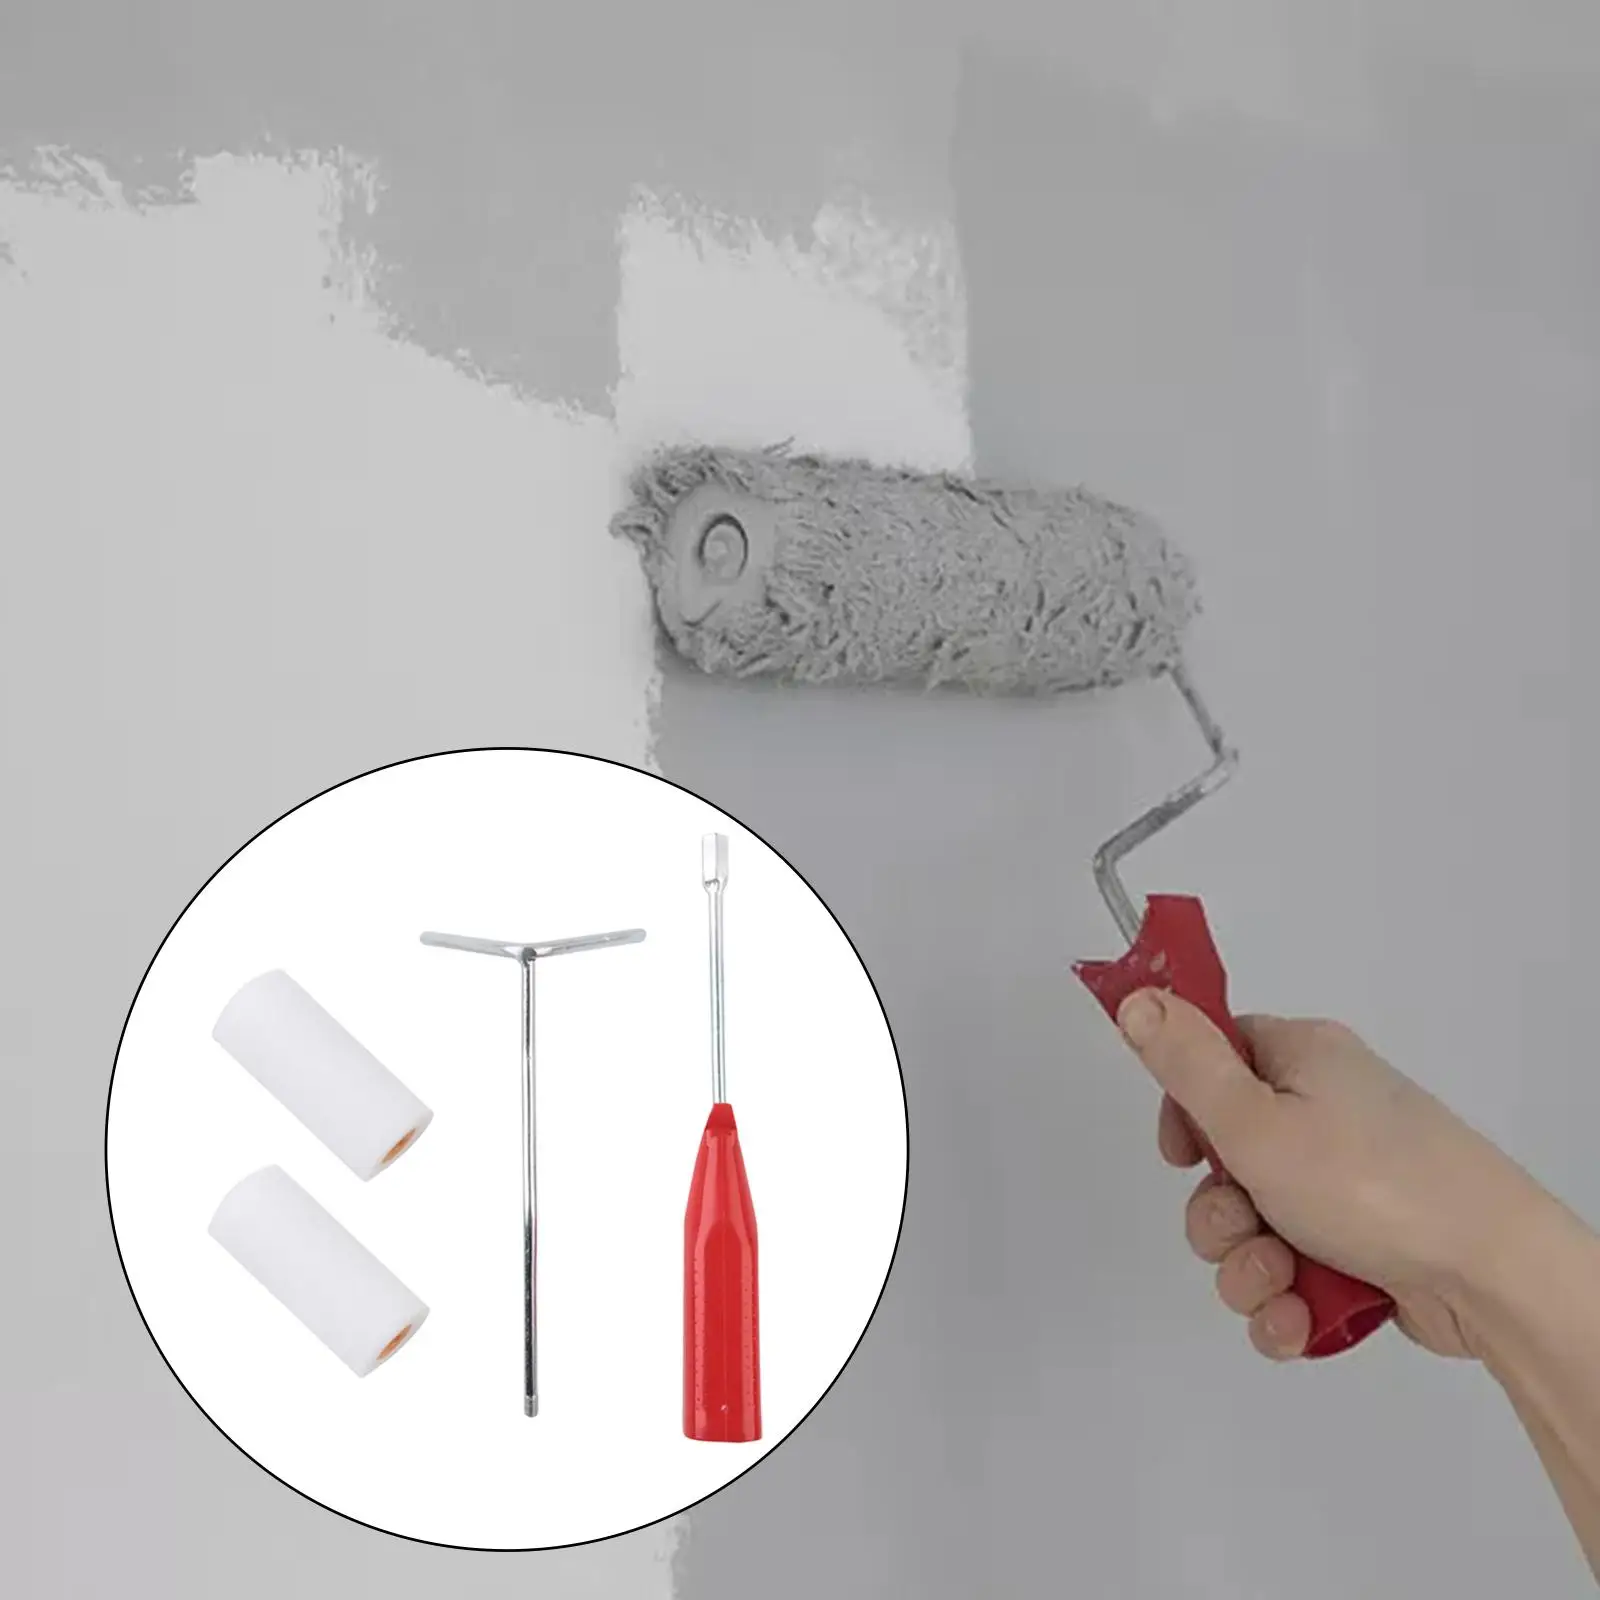 Multifunctional Painting Roller Paint Roller Brush Kit DIY Painting Tool Mural Brush for Walls Ceiling Home DIY Improvement